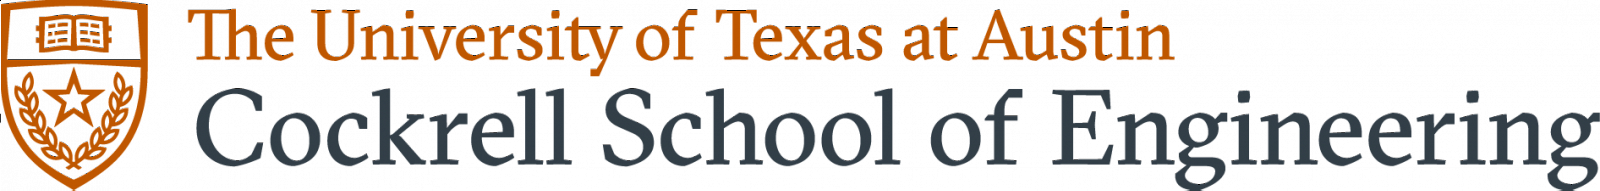 cockrell school formal logo